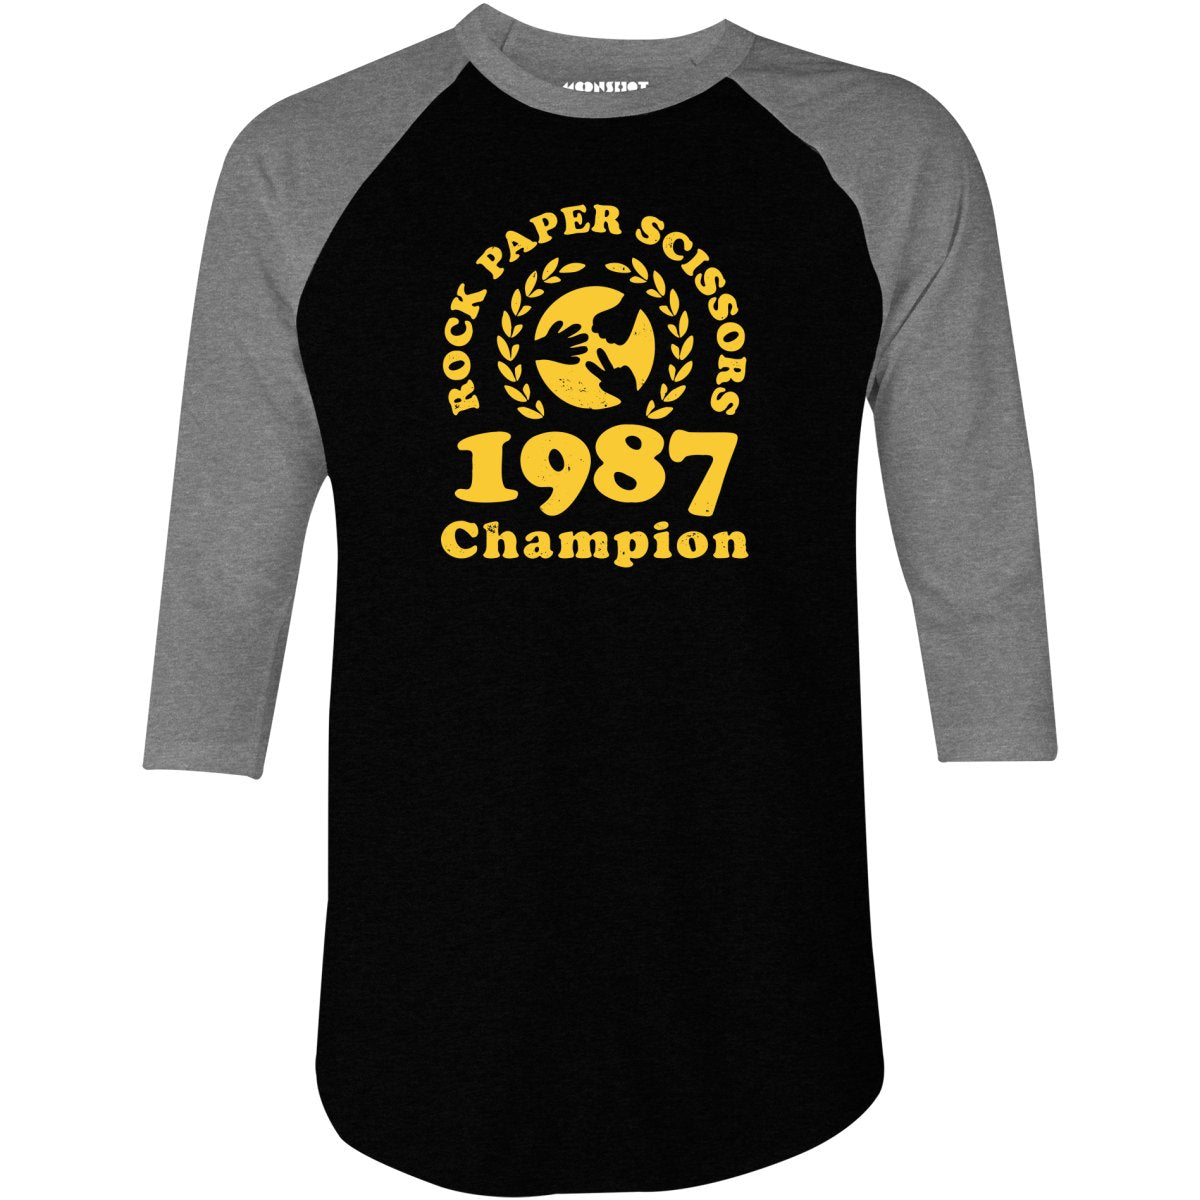 Rock Paper Scissors Champion - 3/4 Sleeve Raglan T-Shirt